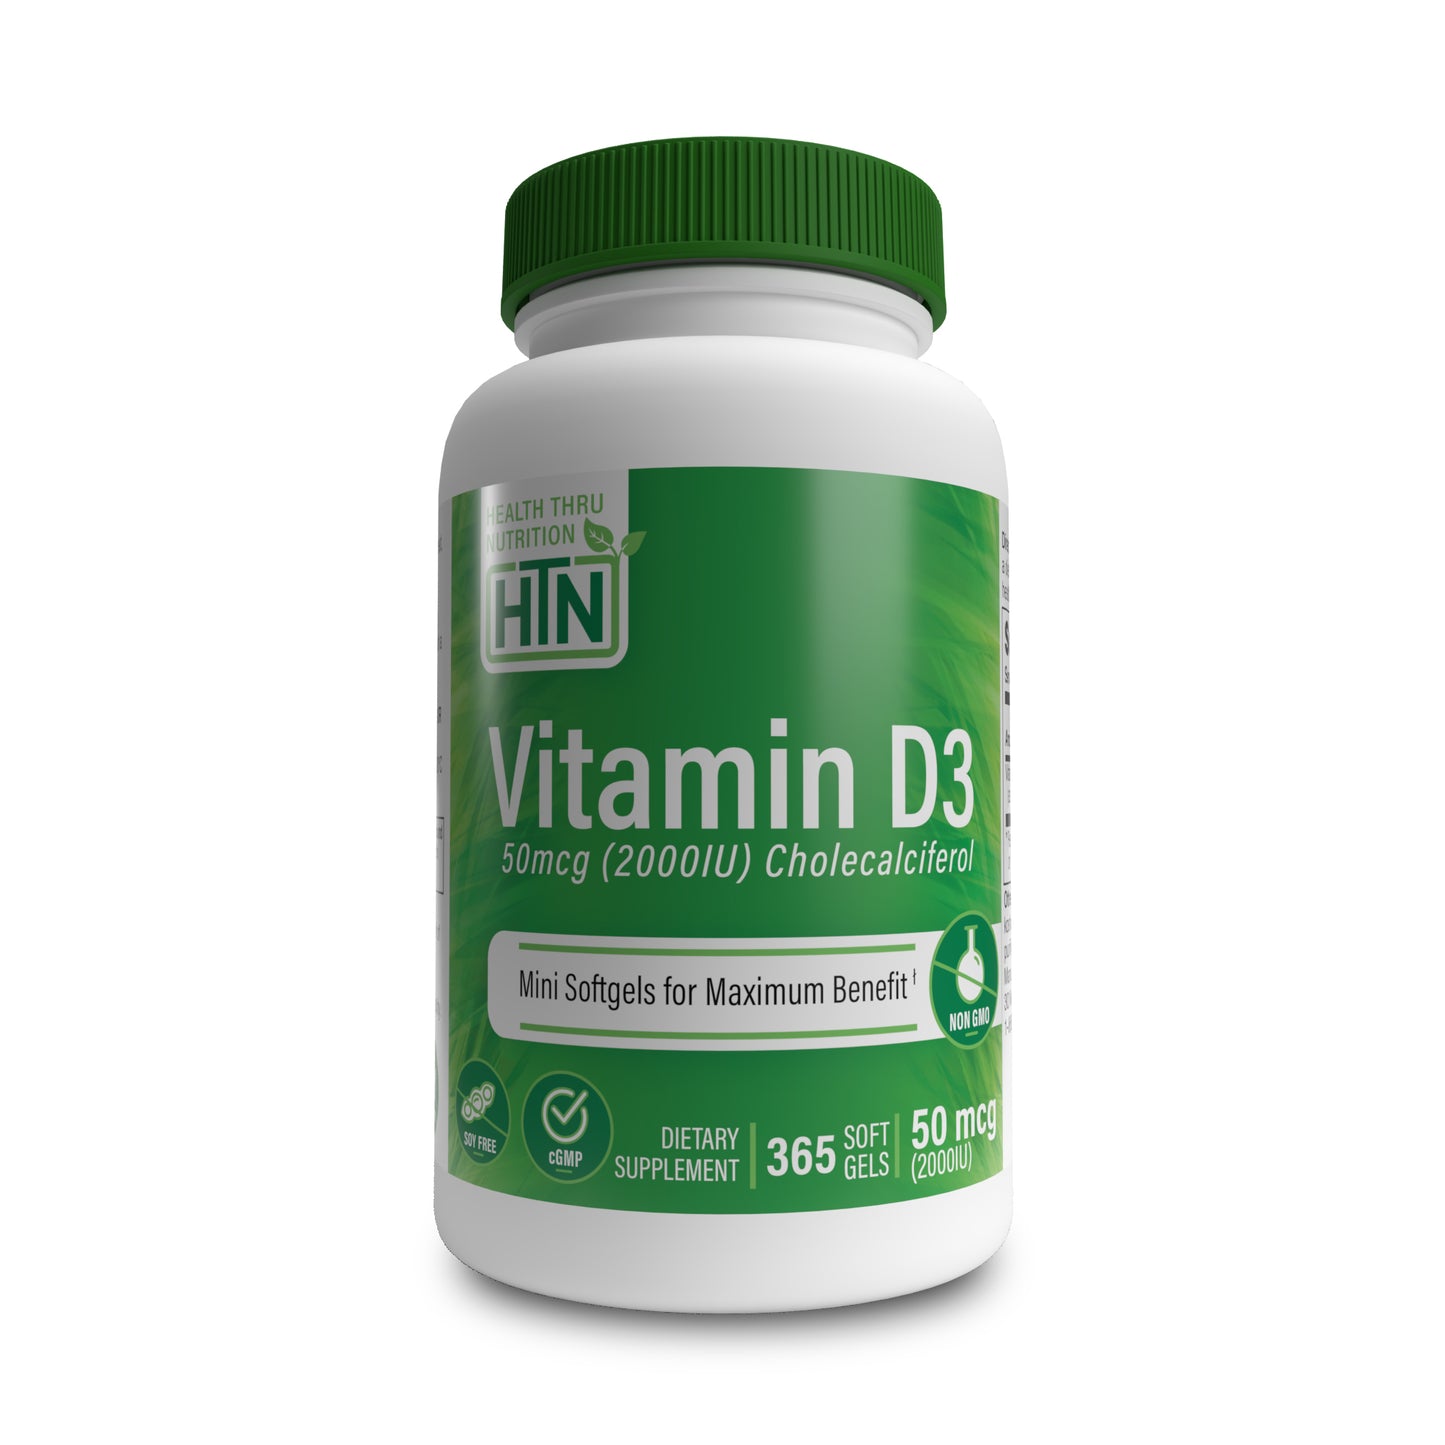 Vitamin D3 (as Cholecalciferol) in EVOO